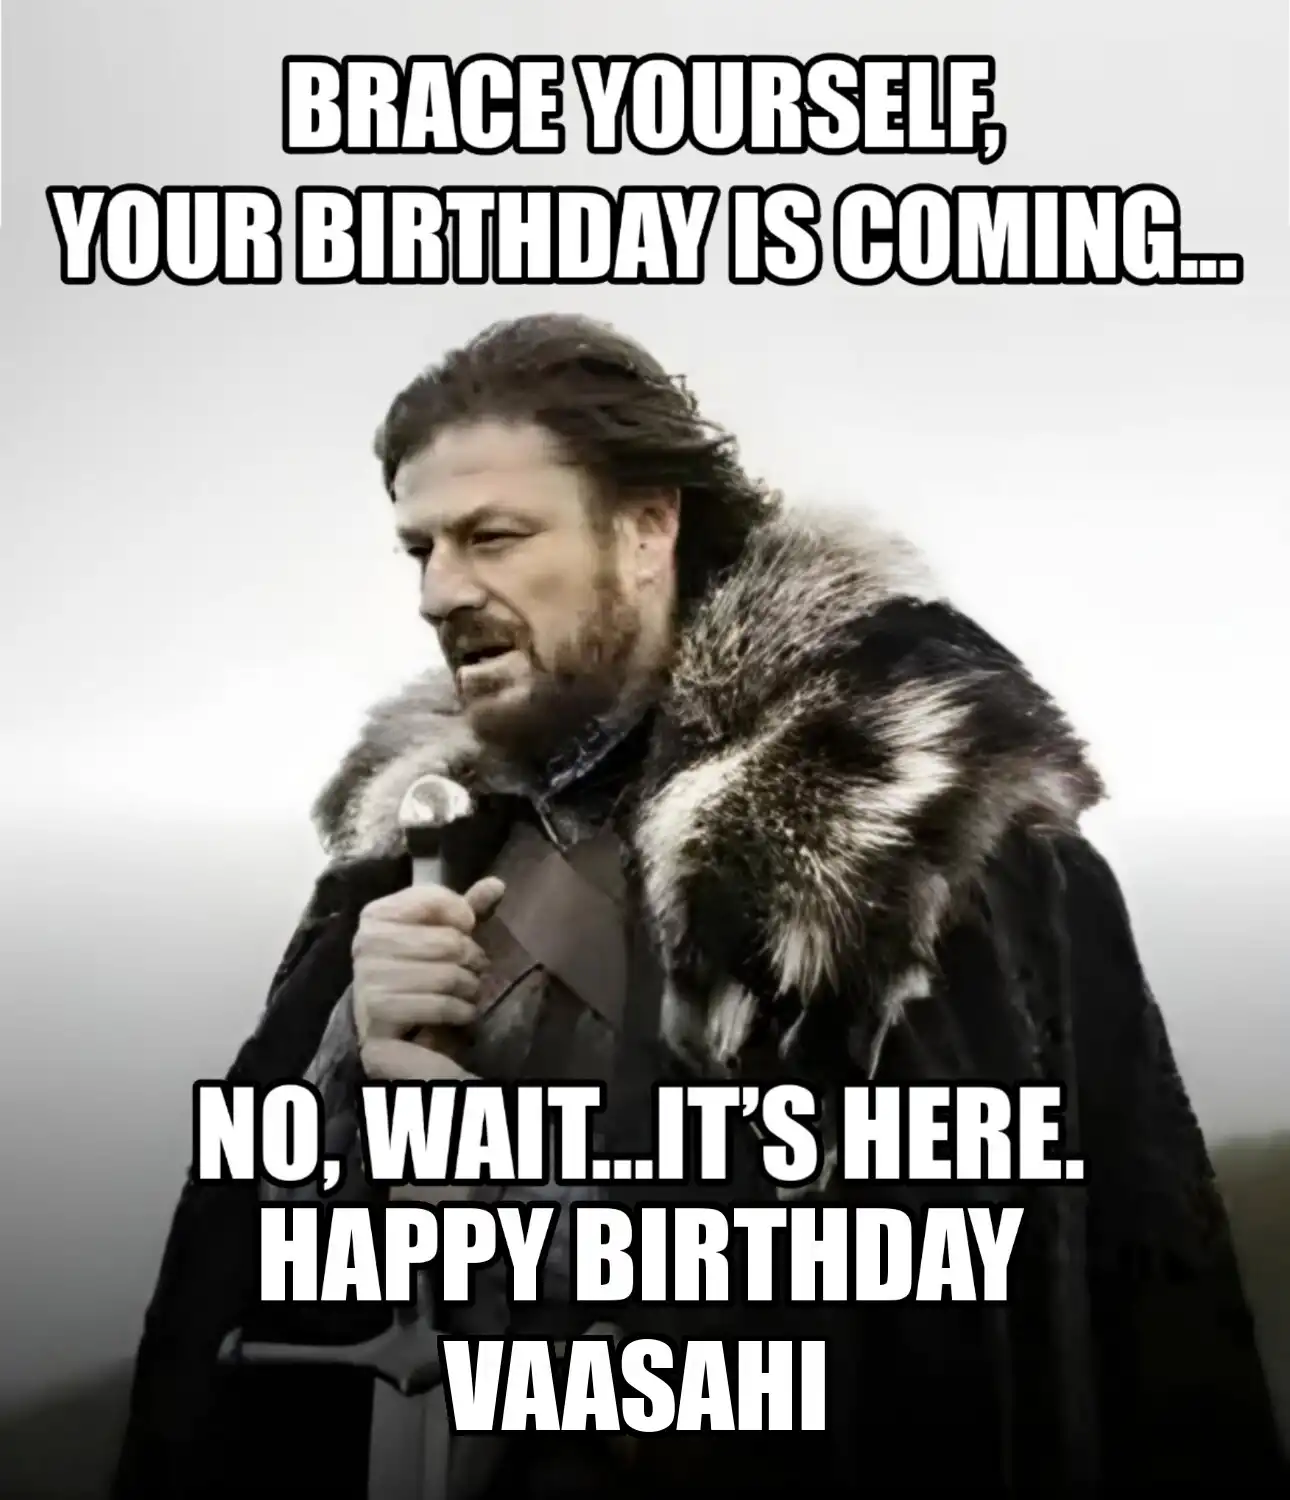 Happy Birthday Vaasahi Brace Yourself Your Birthday Is Coming Meme